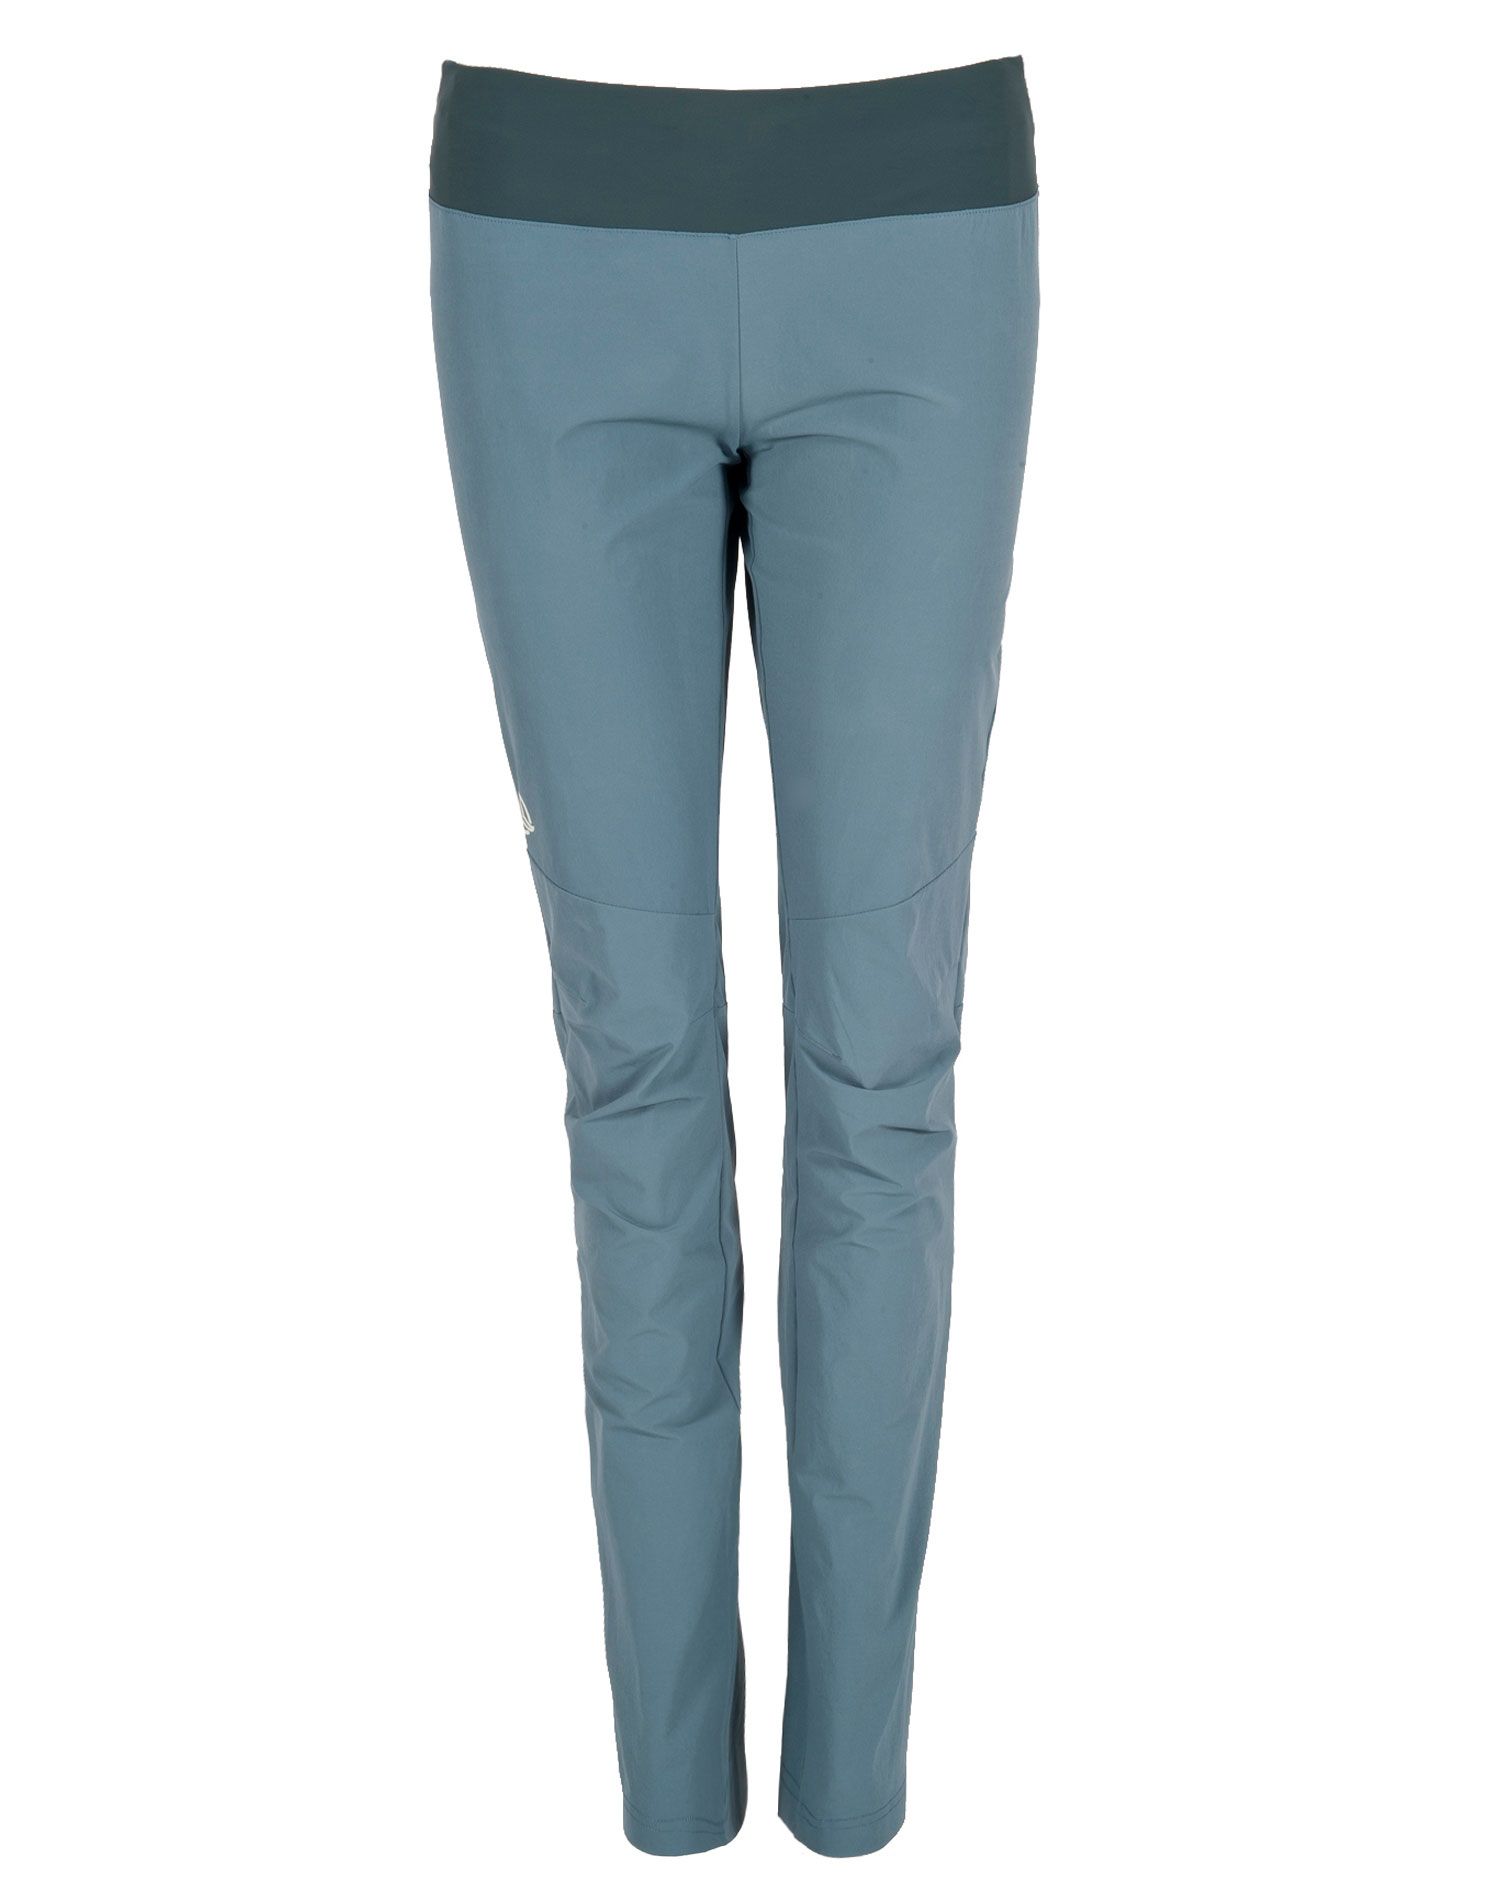 Ternua - Helix Pant W - Outdoor trousers - Women's